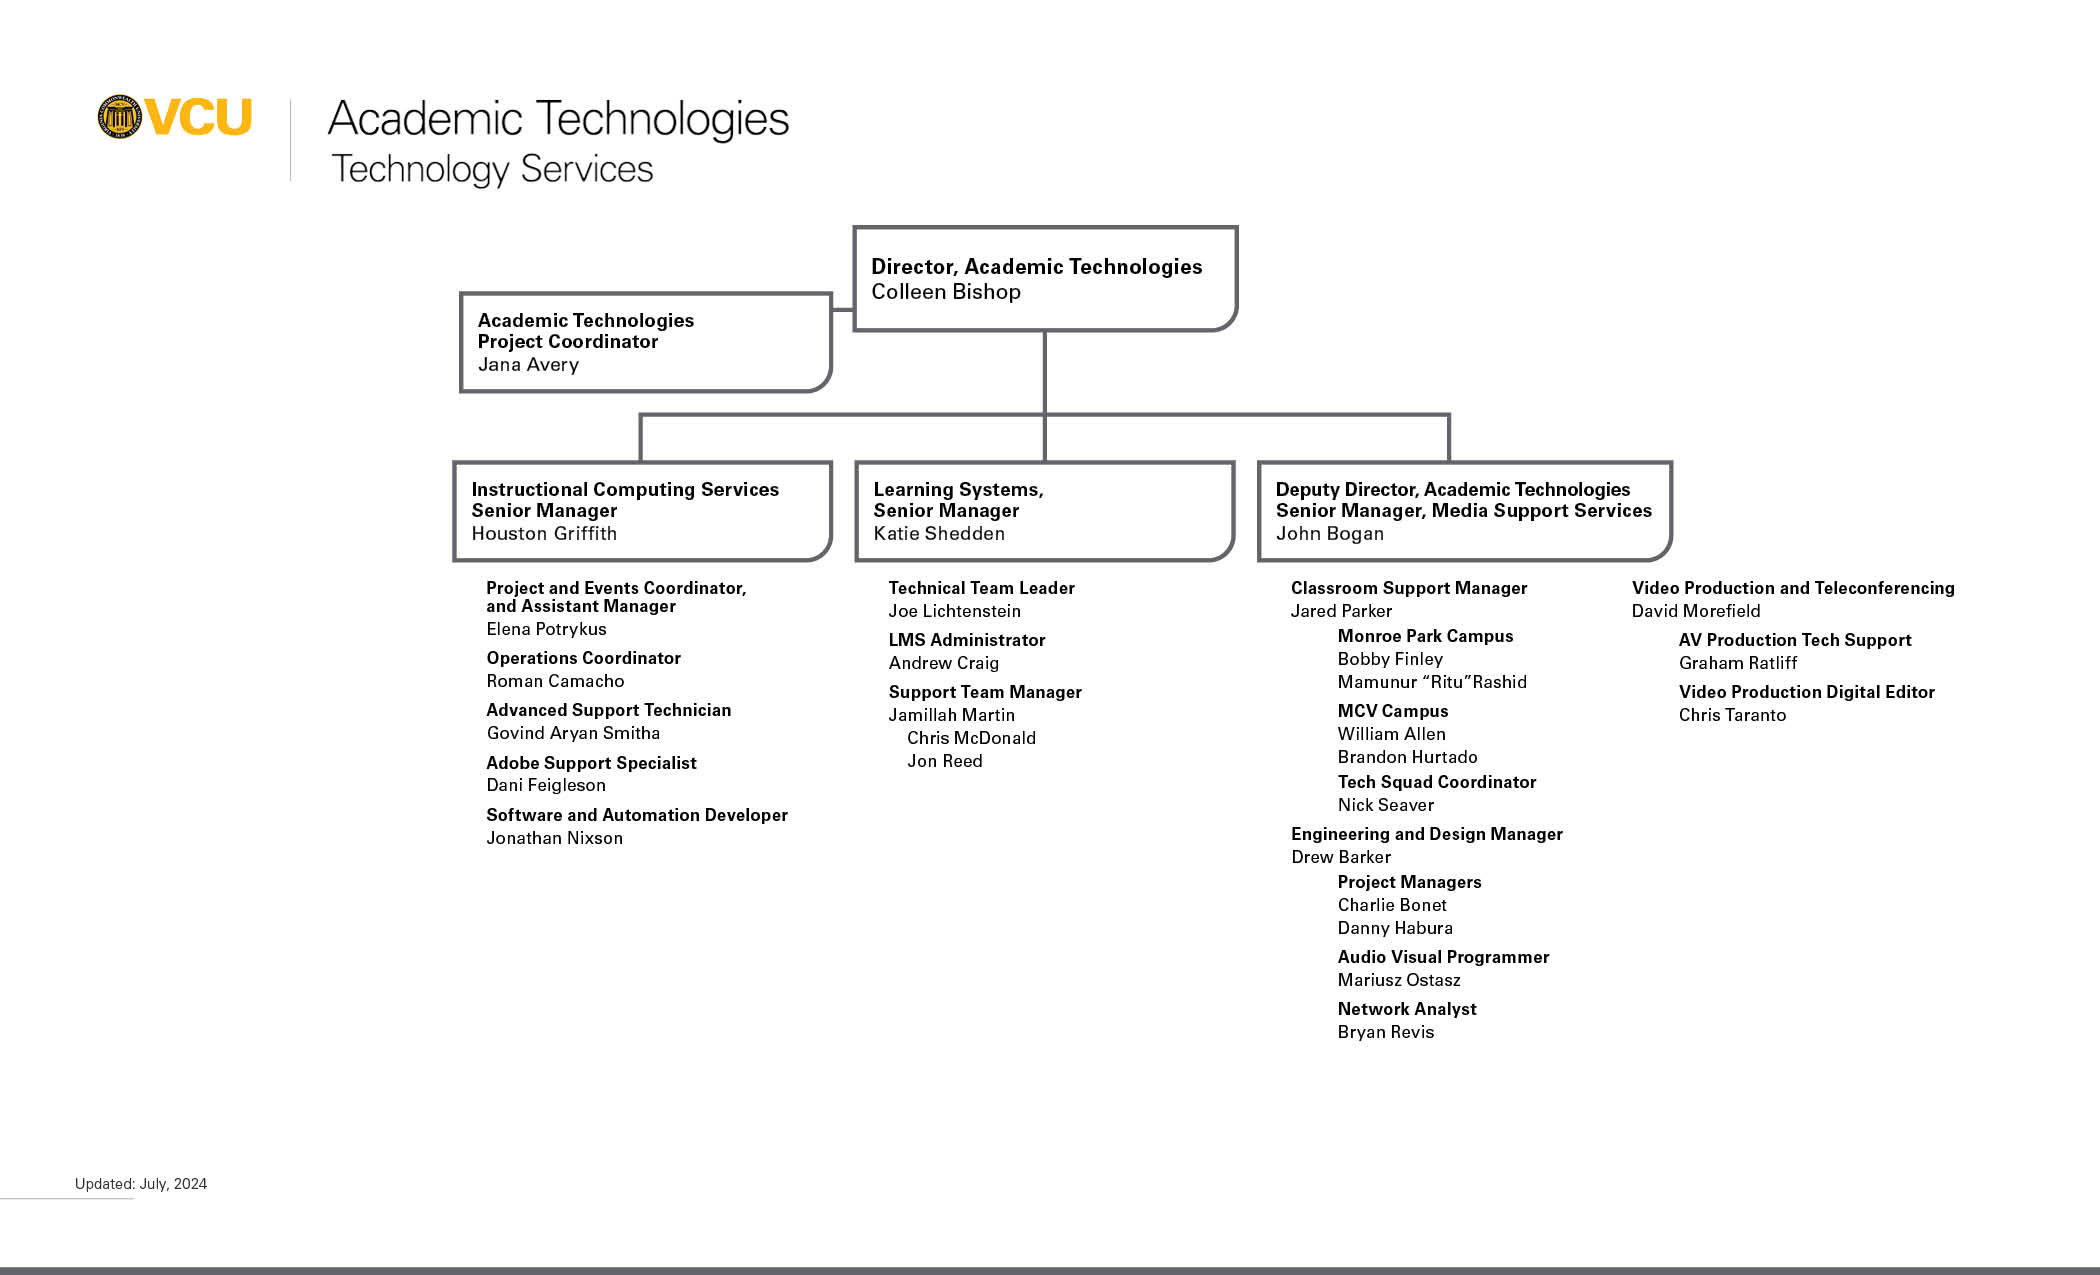 Academic Technologies org chart